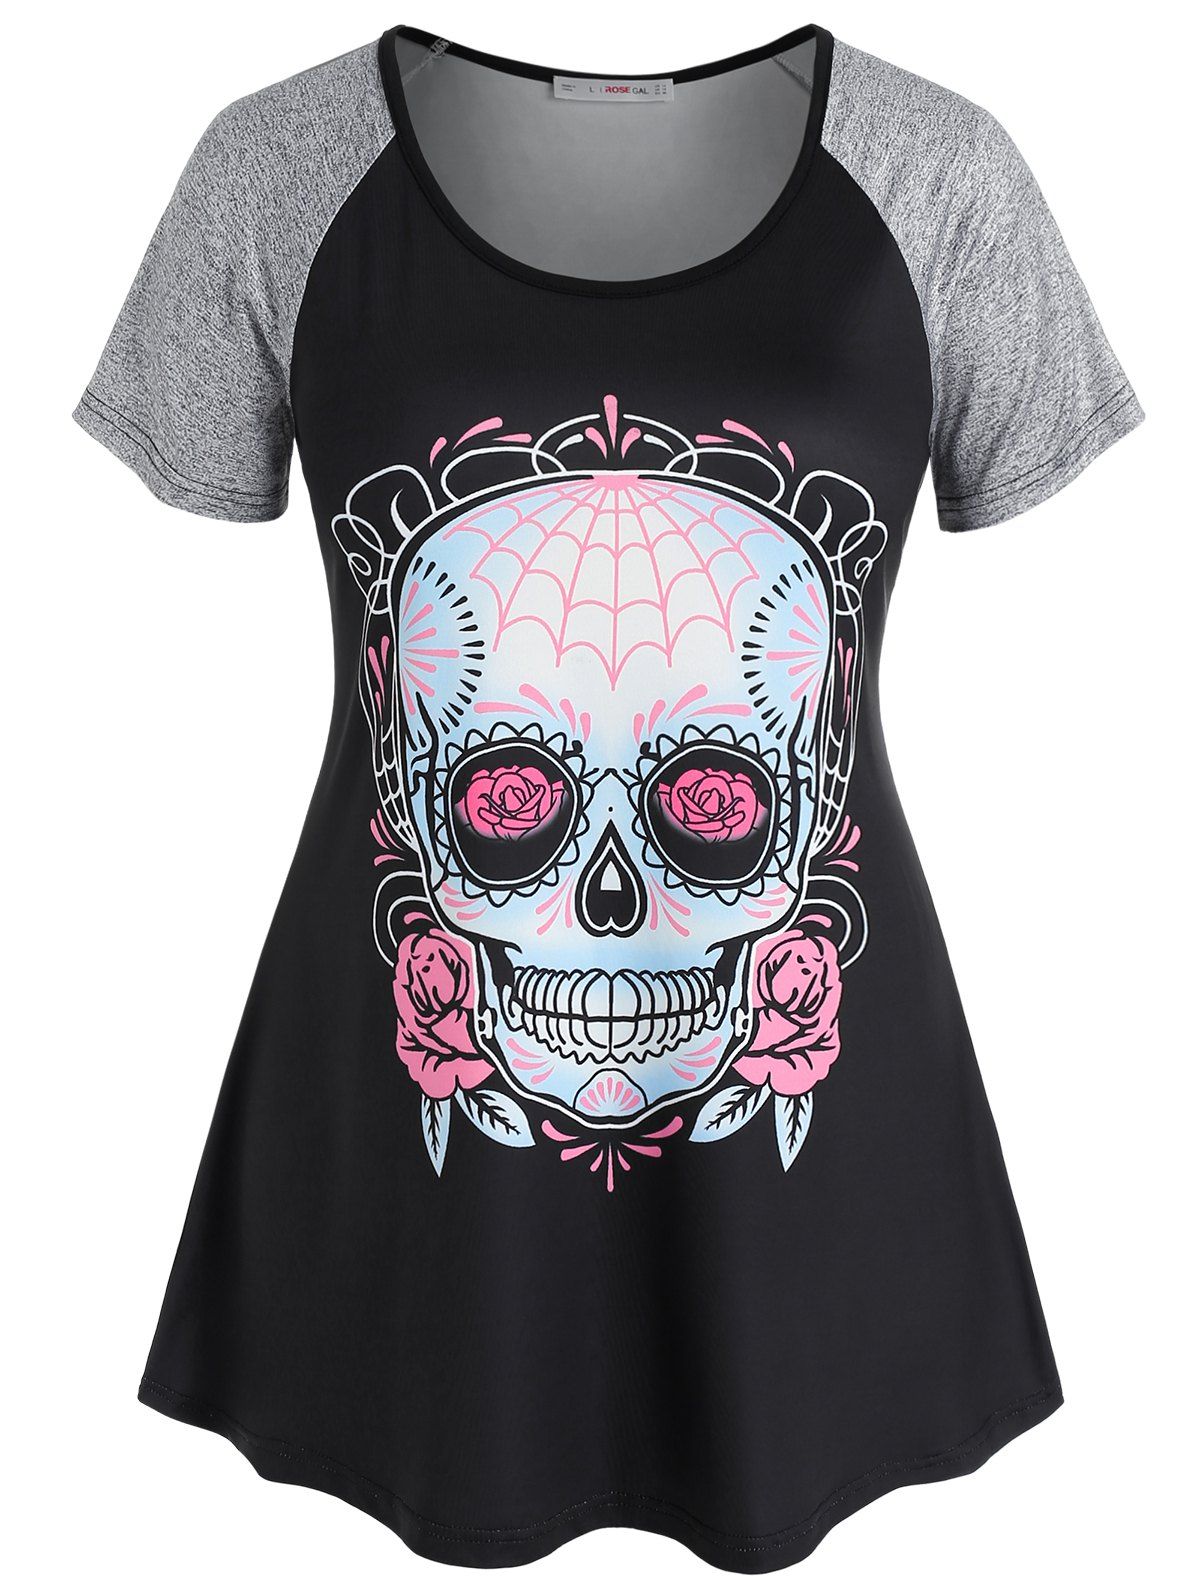 Plus Size Raglan Sleeve Skull Print Gothic Tee - BLACK 5X